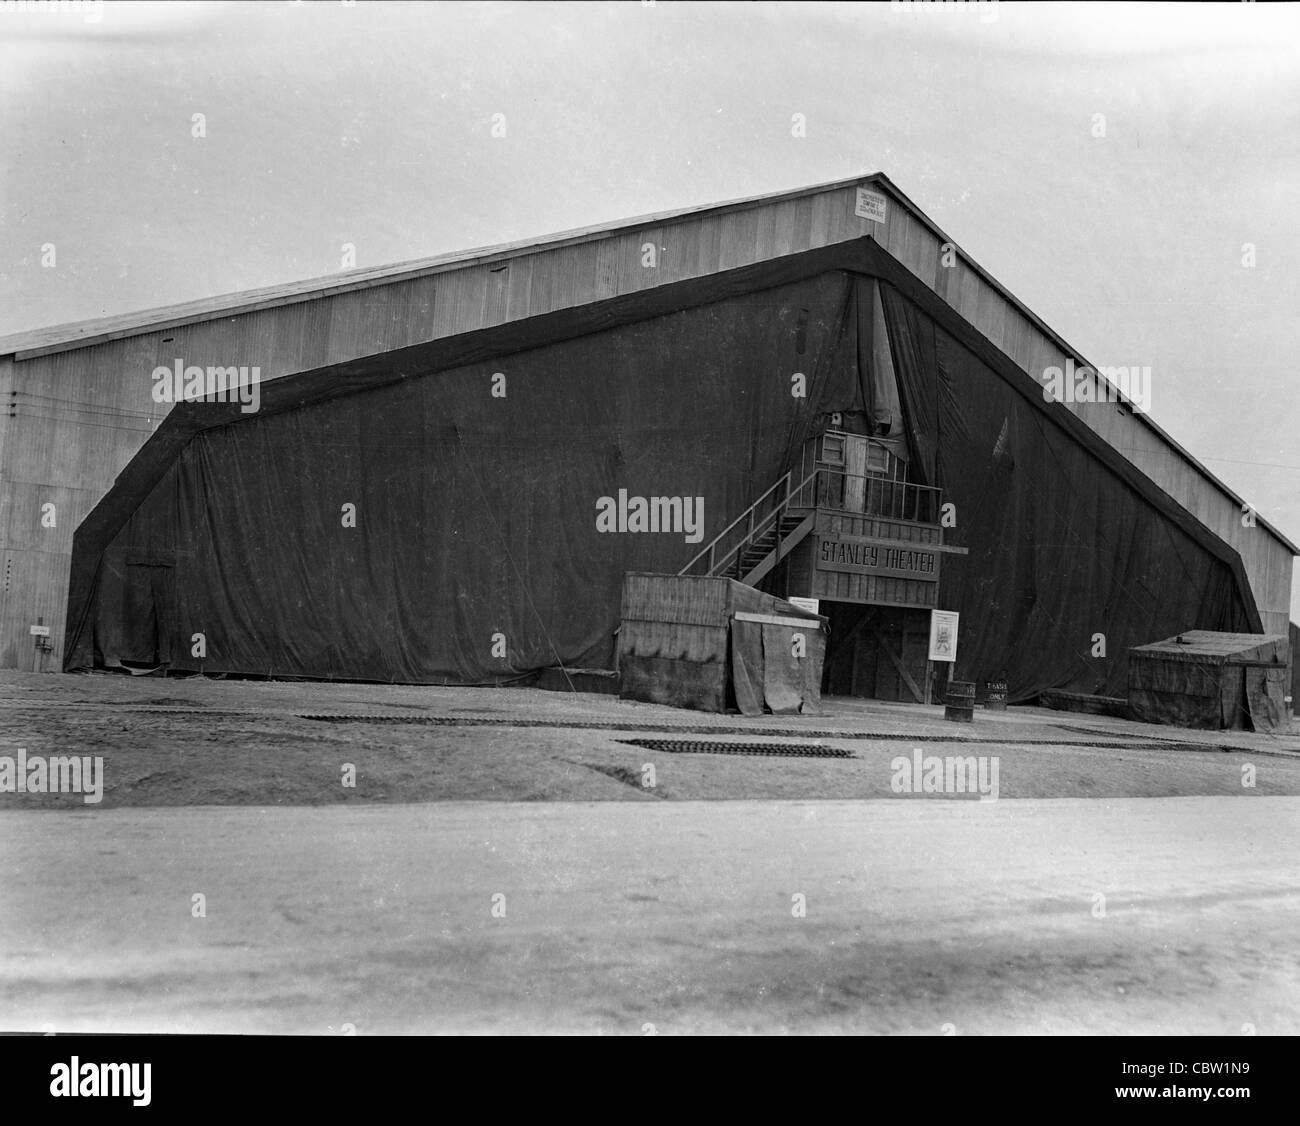 Europe and England during World War II. hanger hangar Stock Photo - Alamy